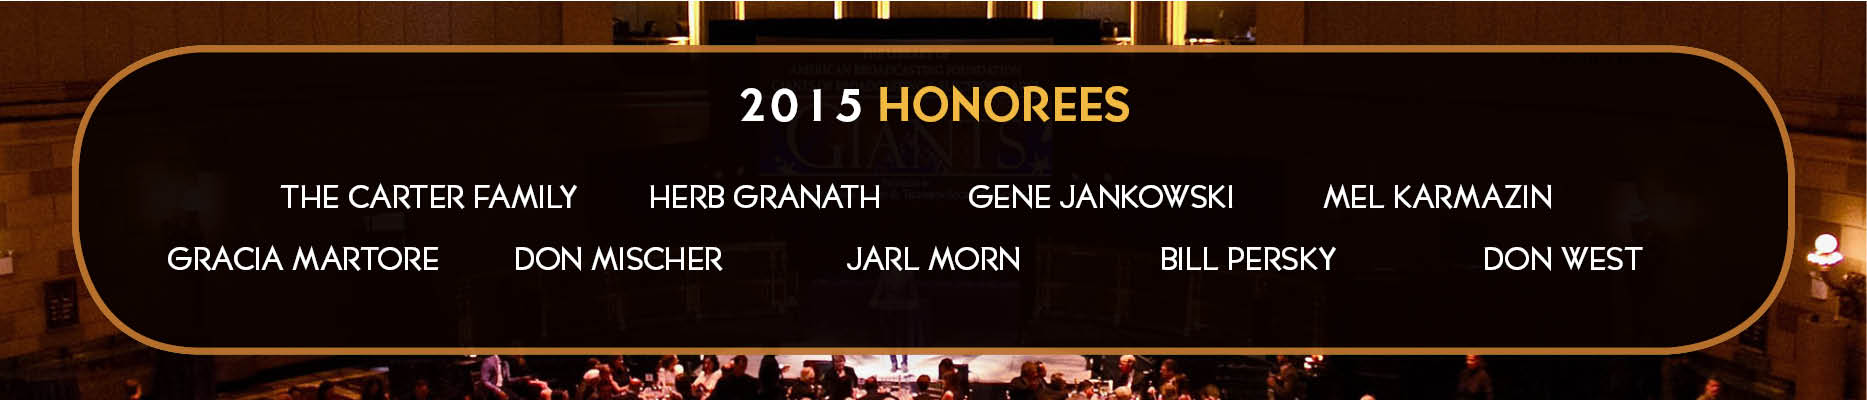 2015 Honorees